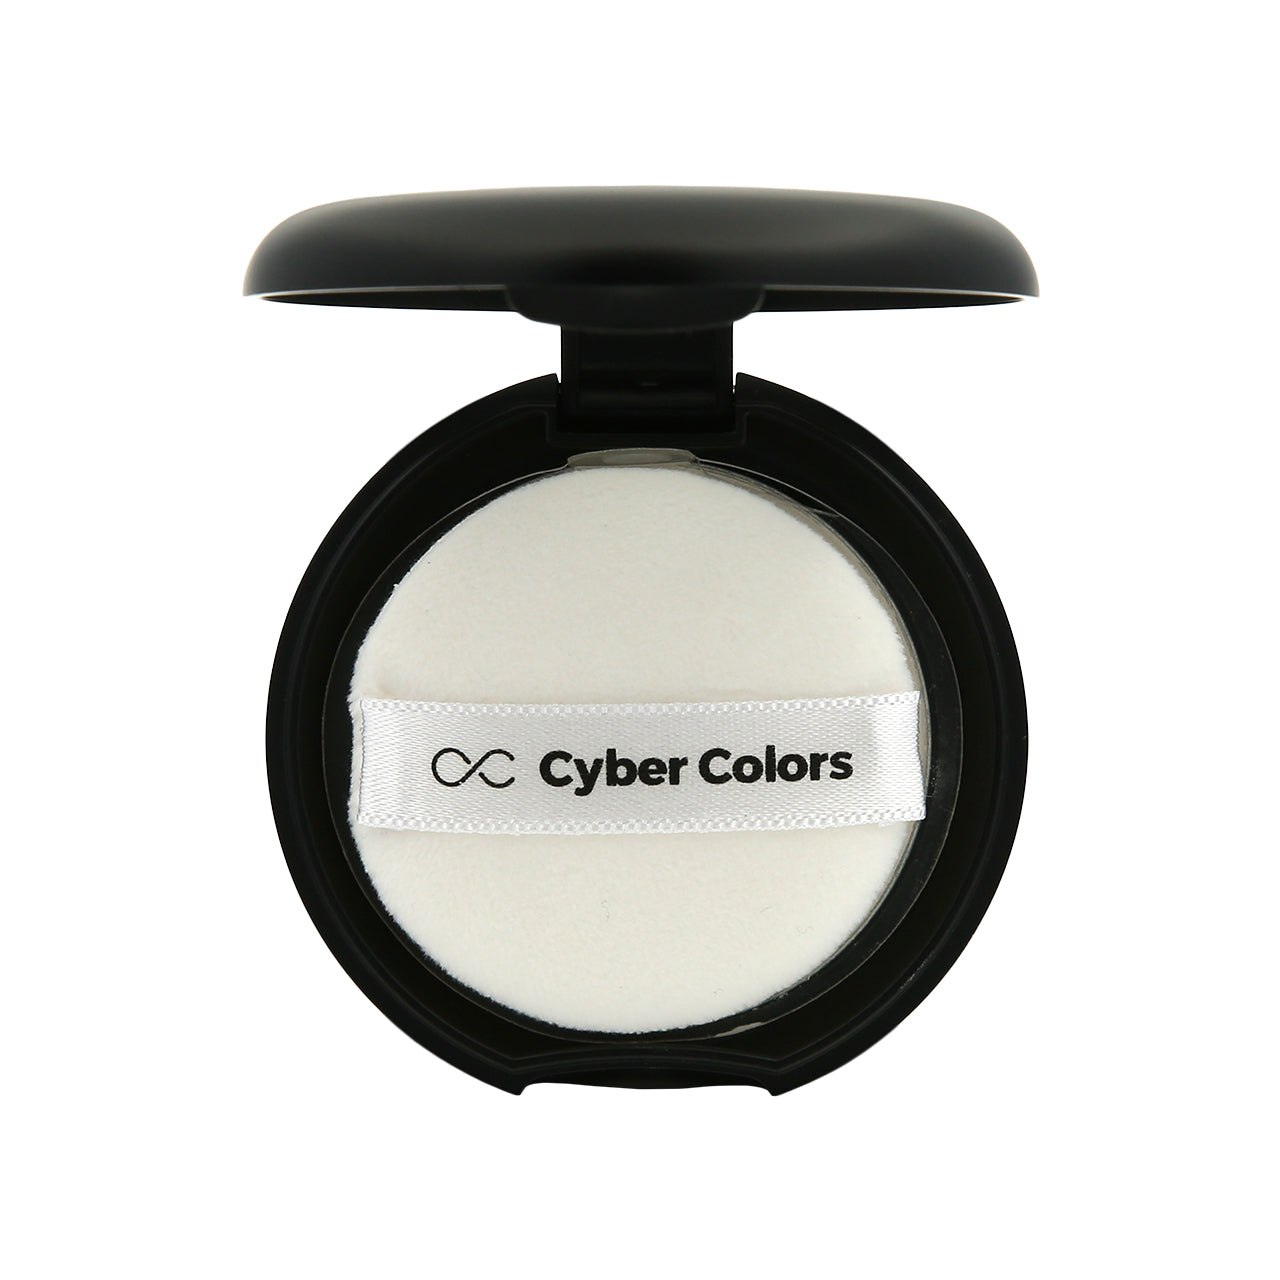 Cyber Colors Matte Retouch Pressed Powder 7.5g